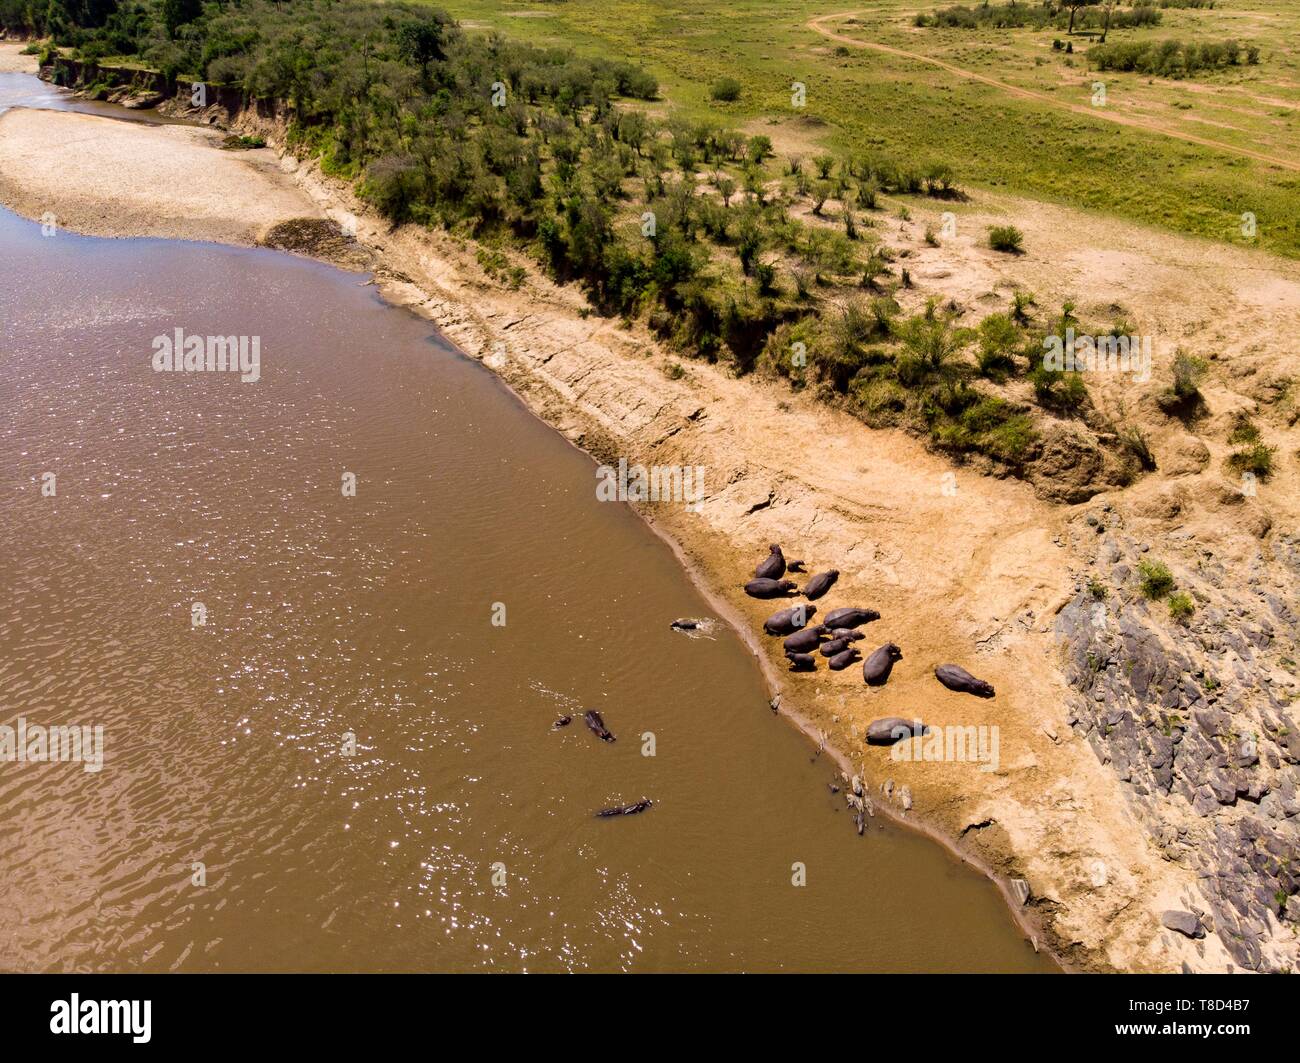 Kenya, Masai Mara, Mara river à partir d'un drone, d'Hippopotame (Hippopotamus amphibius) Banque D'Images